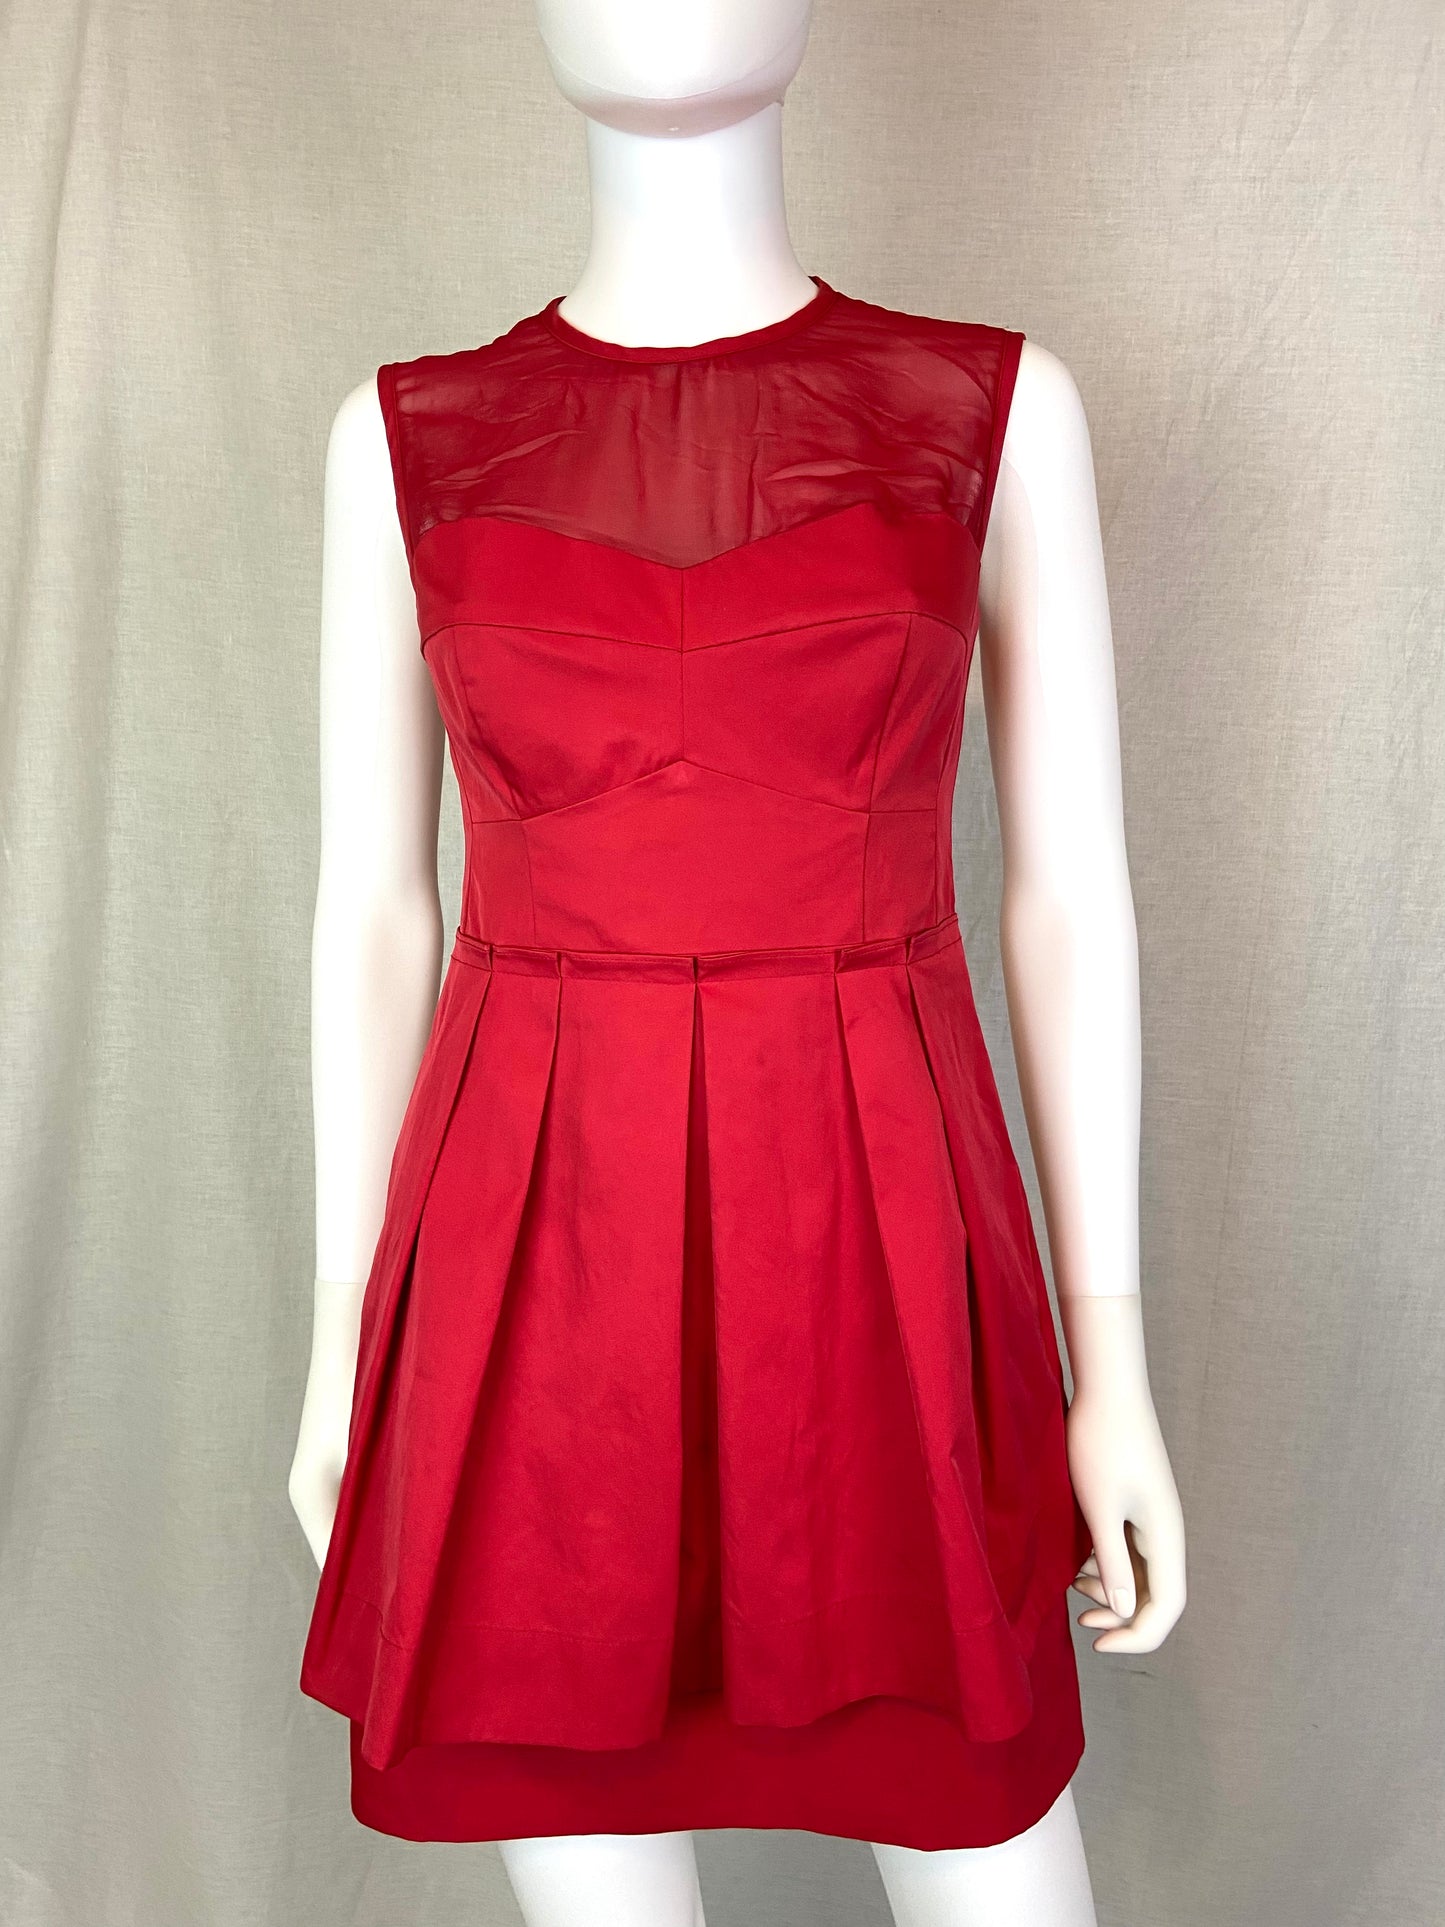 NANETTE LEPORE Red Sheer Peplum Dress 2 ABBY ESSIE STUDIOS